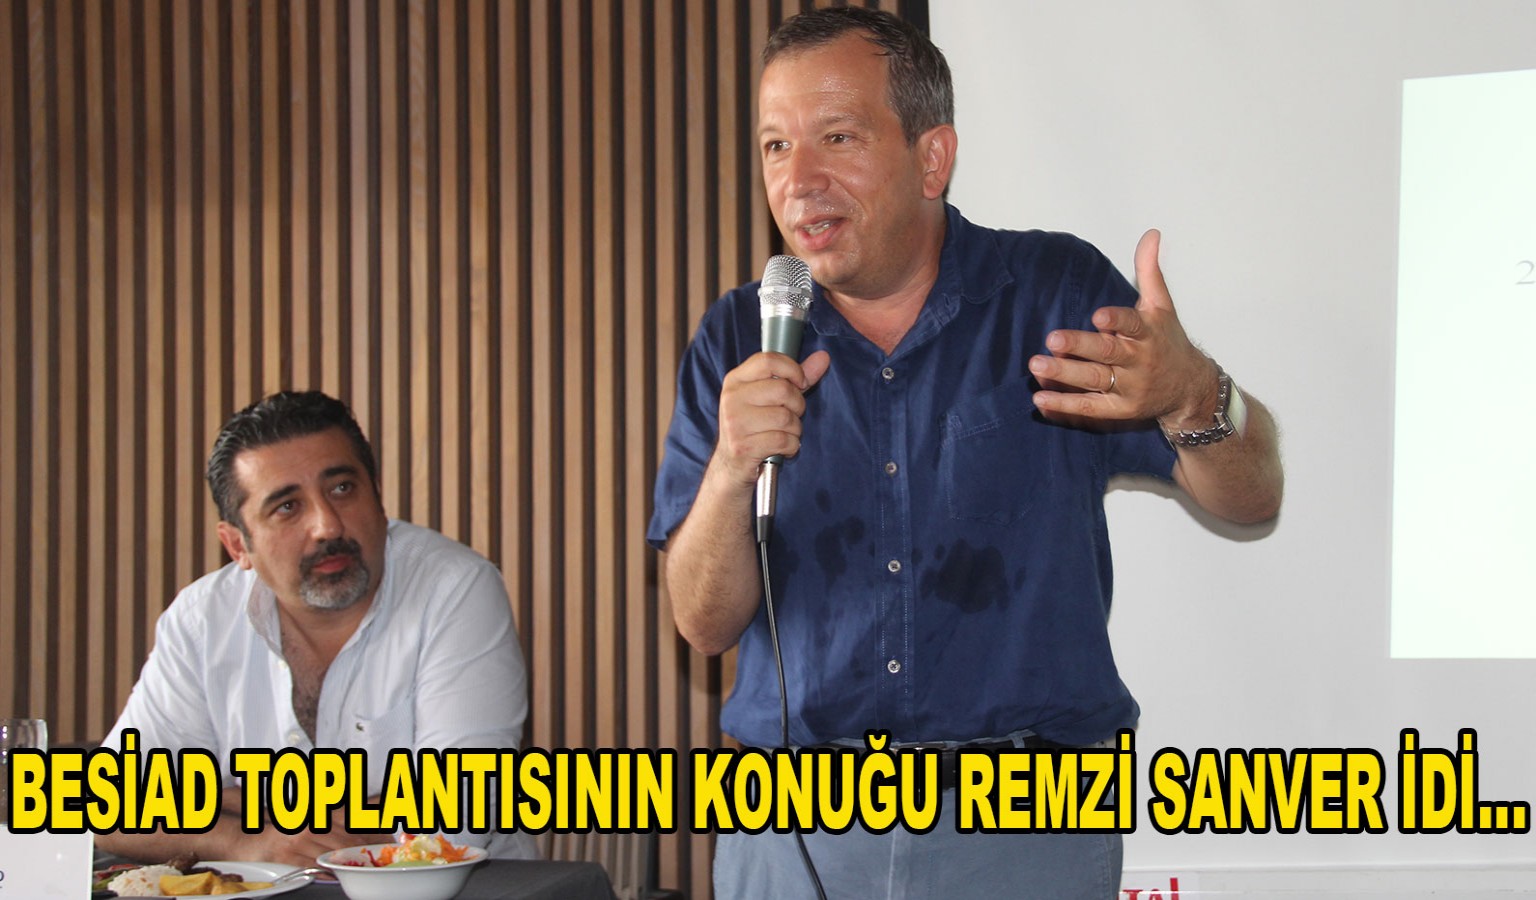 BESİAD TOPLANTISININ KONUĞU REMZİ SANVER İDİ...